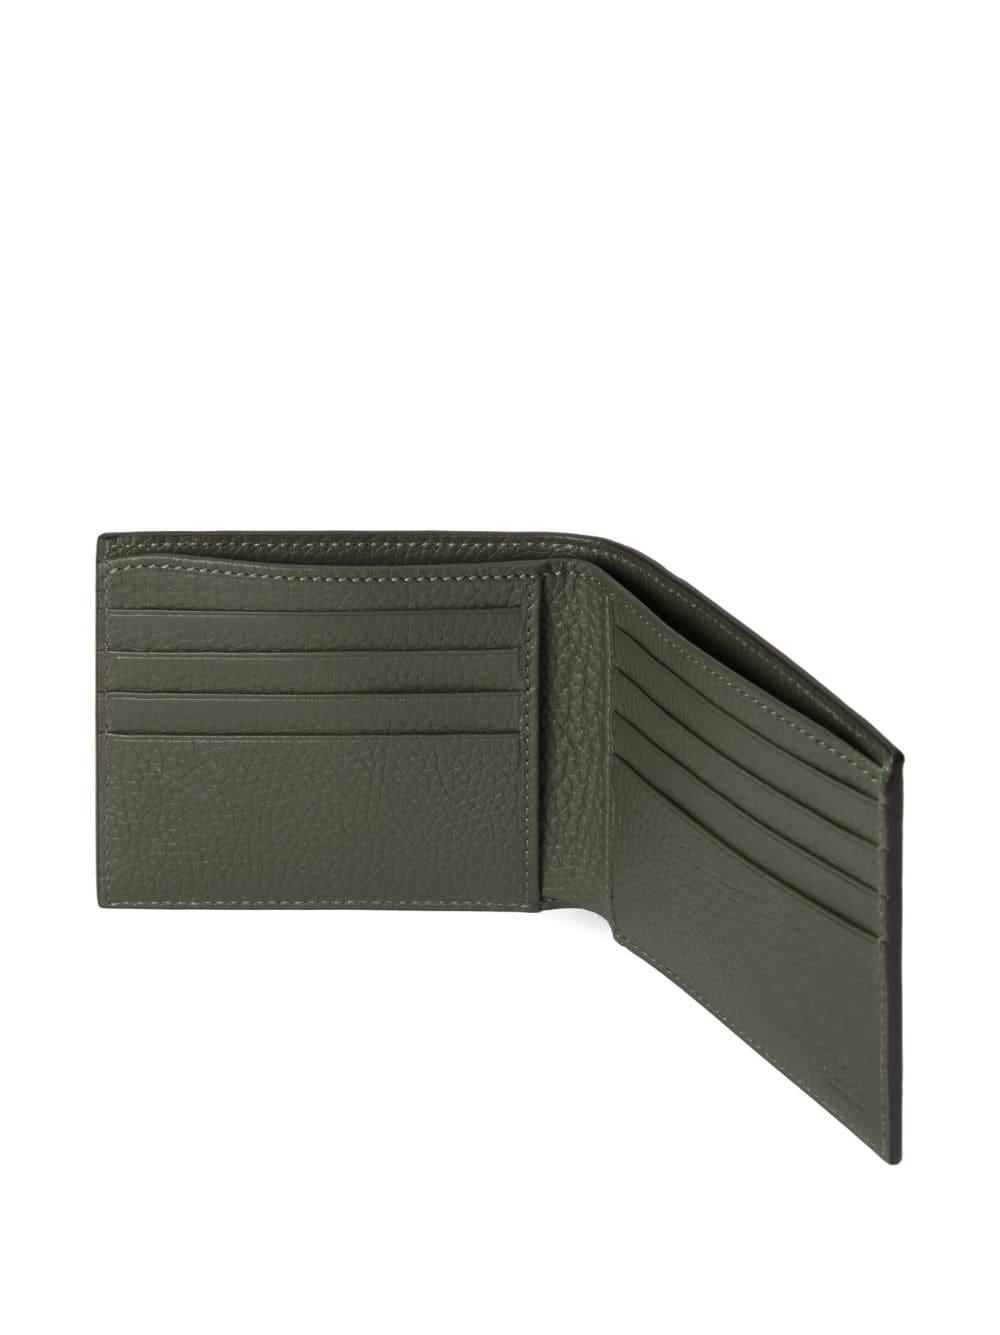 Gucci 260987 1147 Men's Black GG Canvas / Leather Bi-Fold Wallets (GGMW2023)